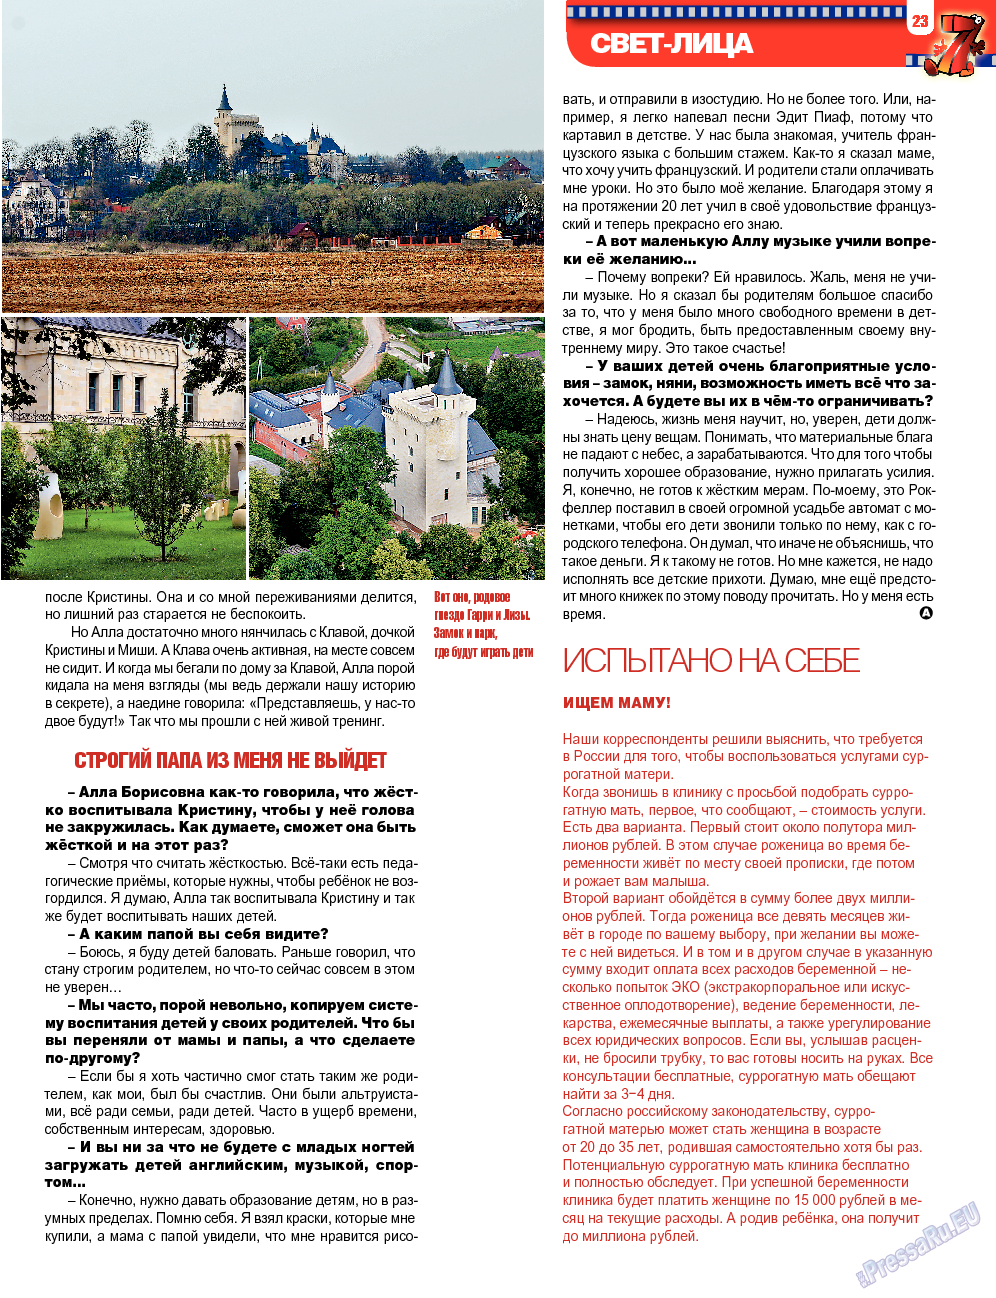 7плюс7я (журнал). 2013 год, номер 42, стр. 23